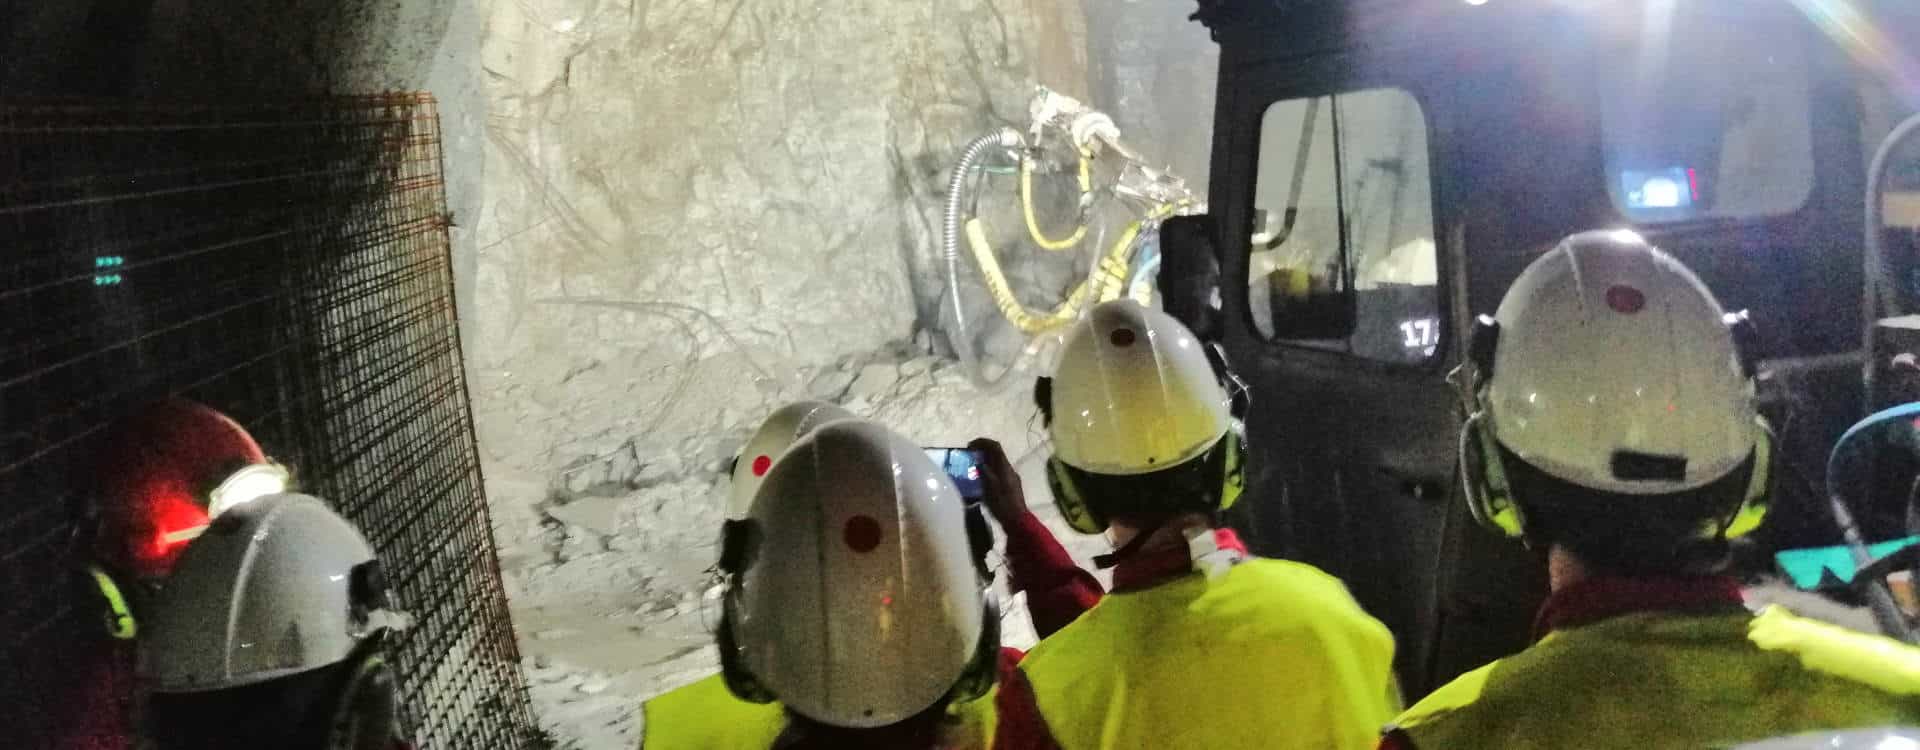 Minetrain trainees observing mining